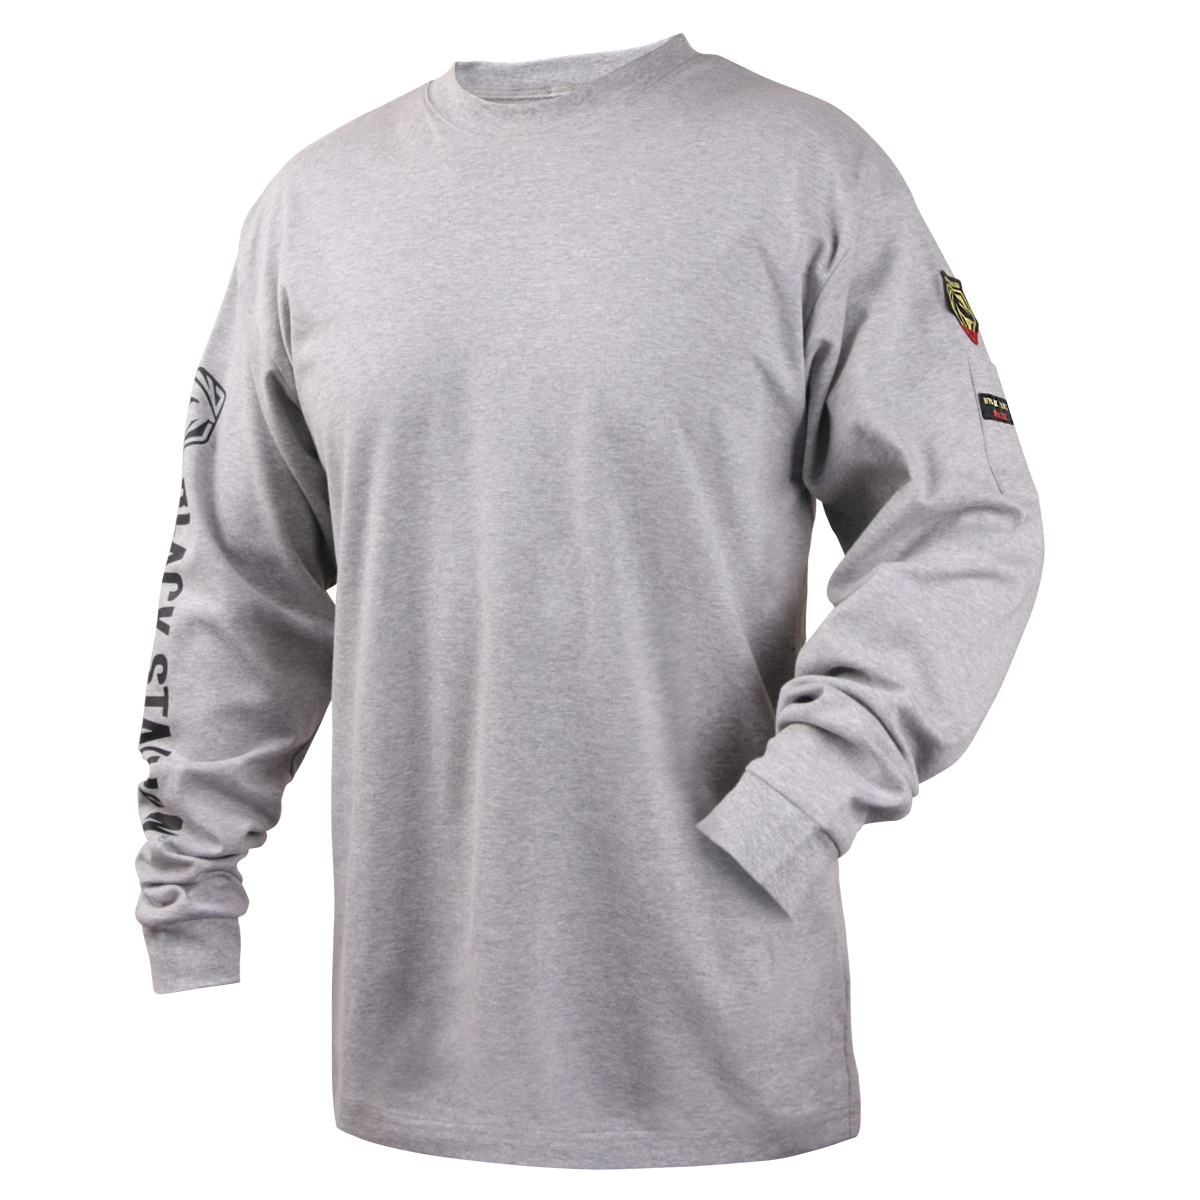 Black Stallion® TF2510-GY-MED TF2510-GY Long Sleeve T-Shirt, Men's, M, Heather Gray, Cotton Jersey Knit